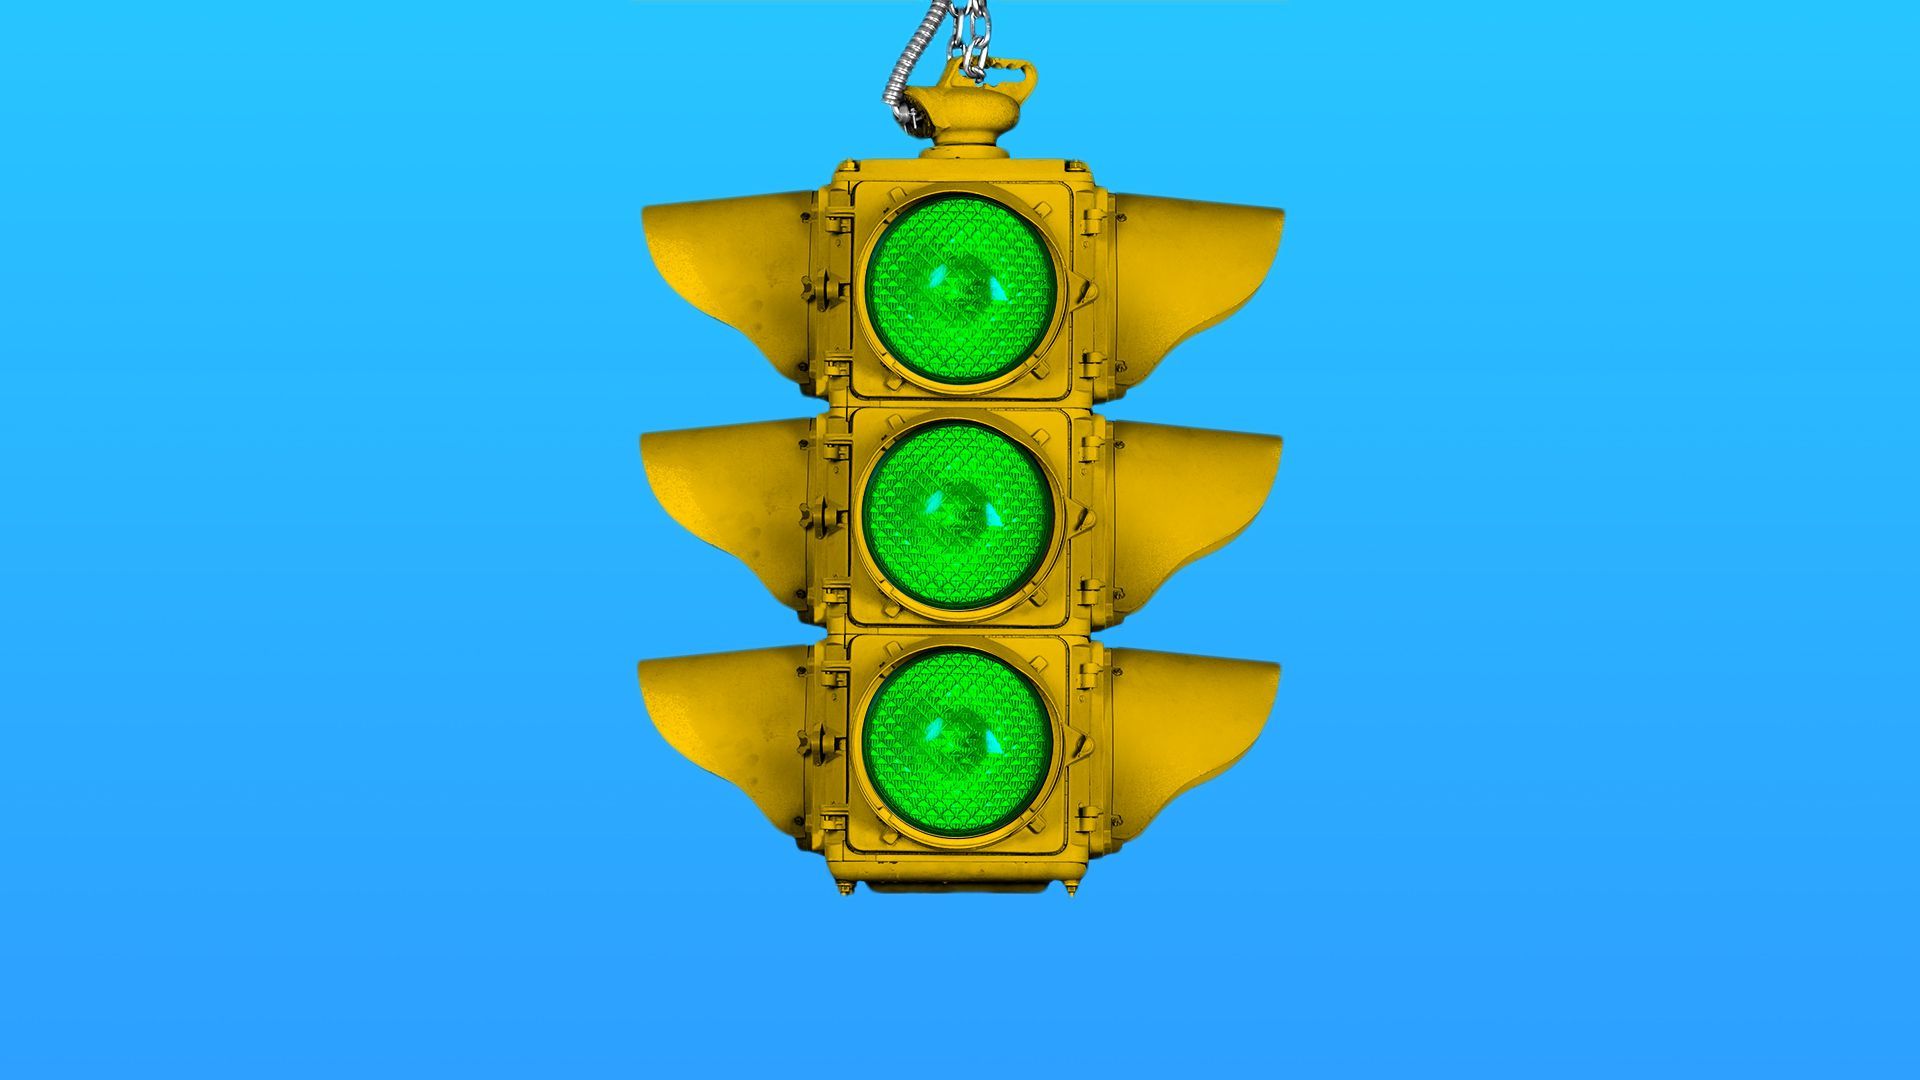 Illustration of a traffic light with three green lights.